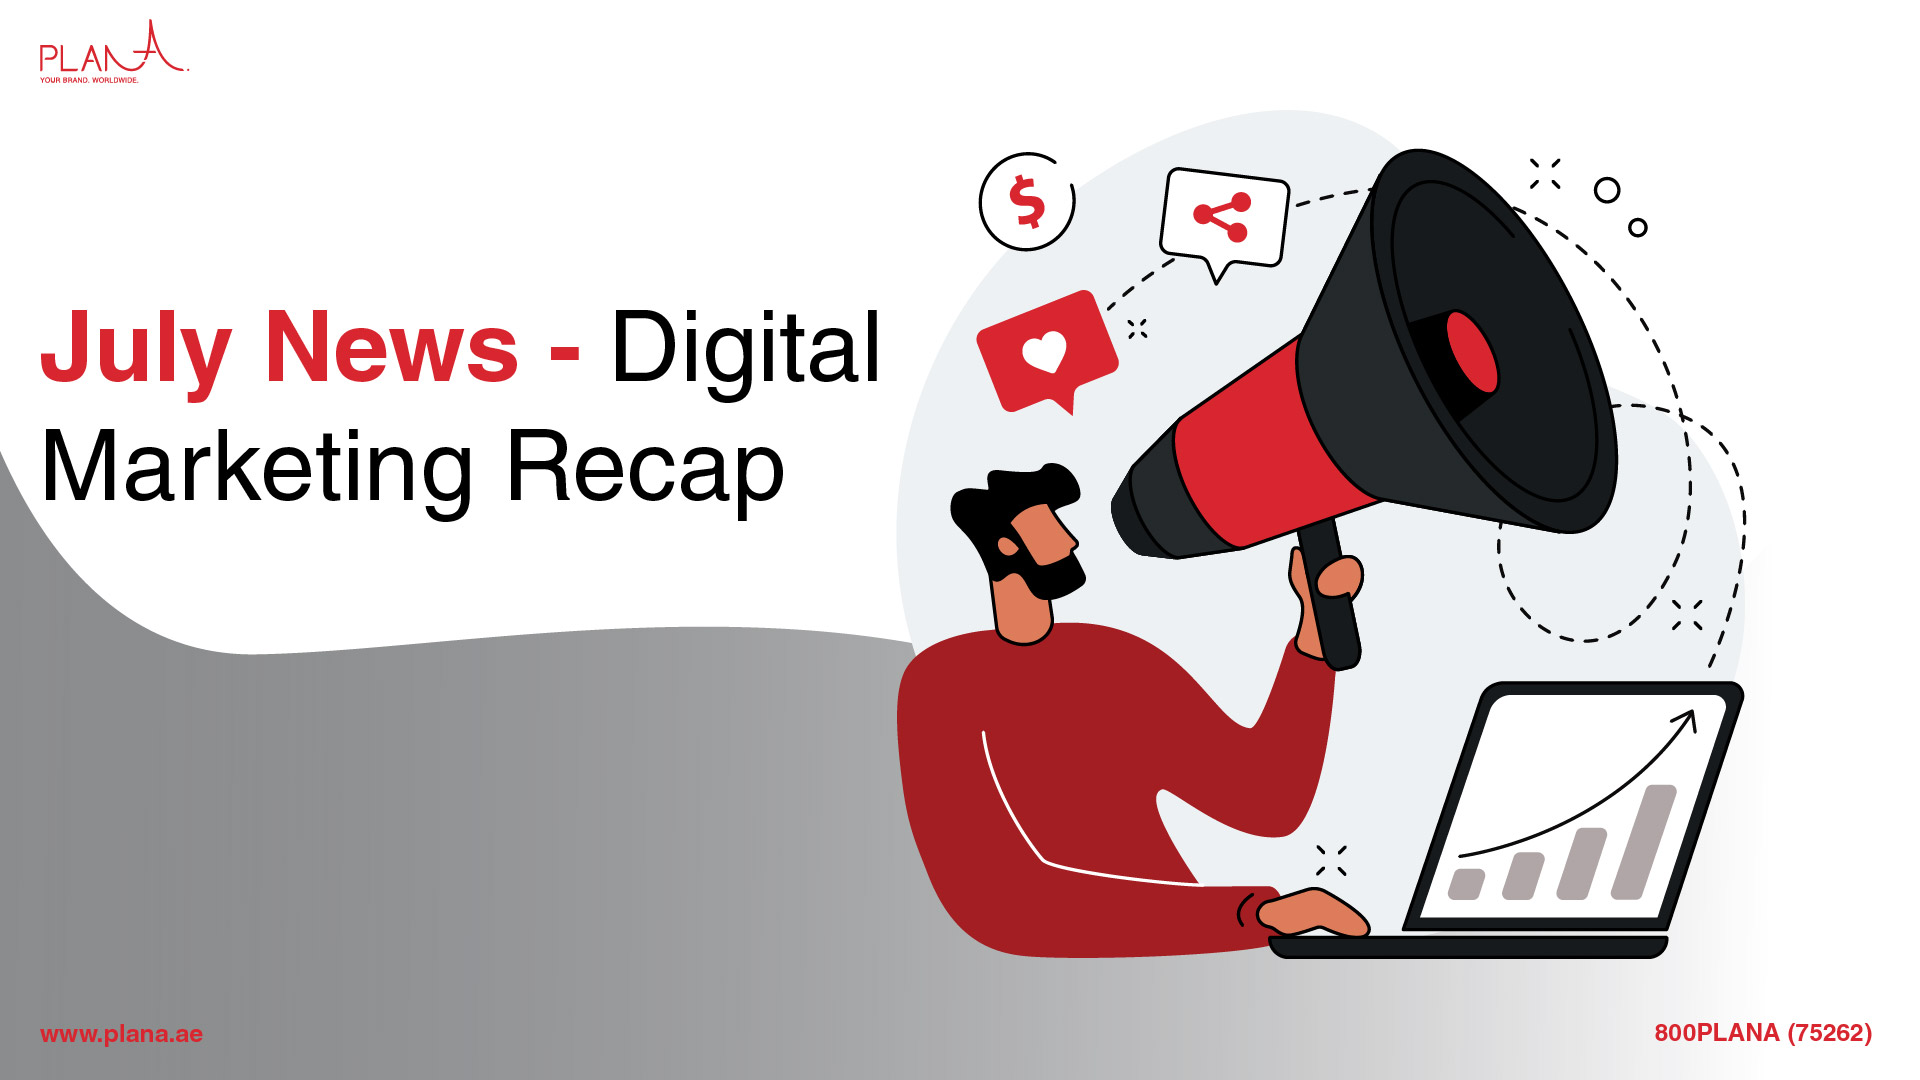 July News - Digital Marketing Recap